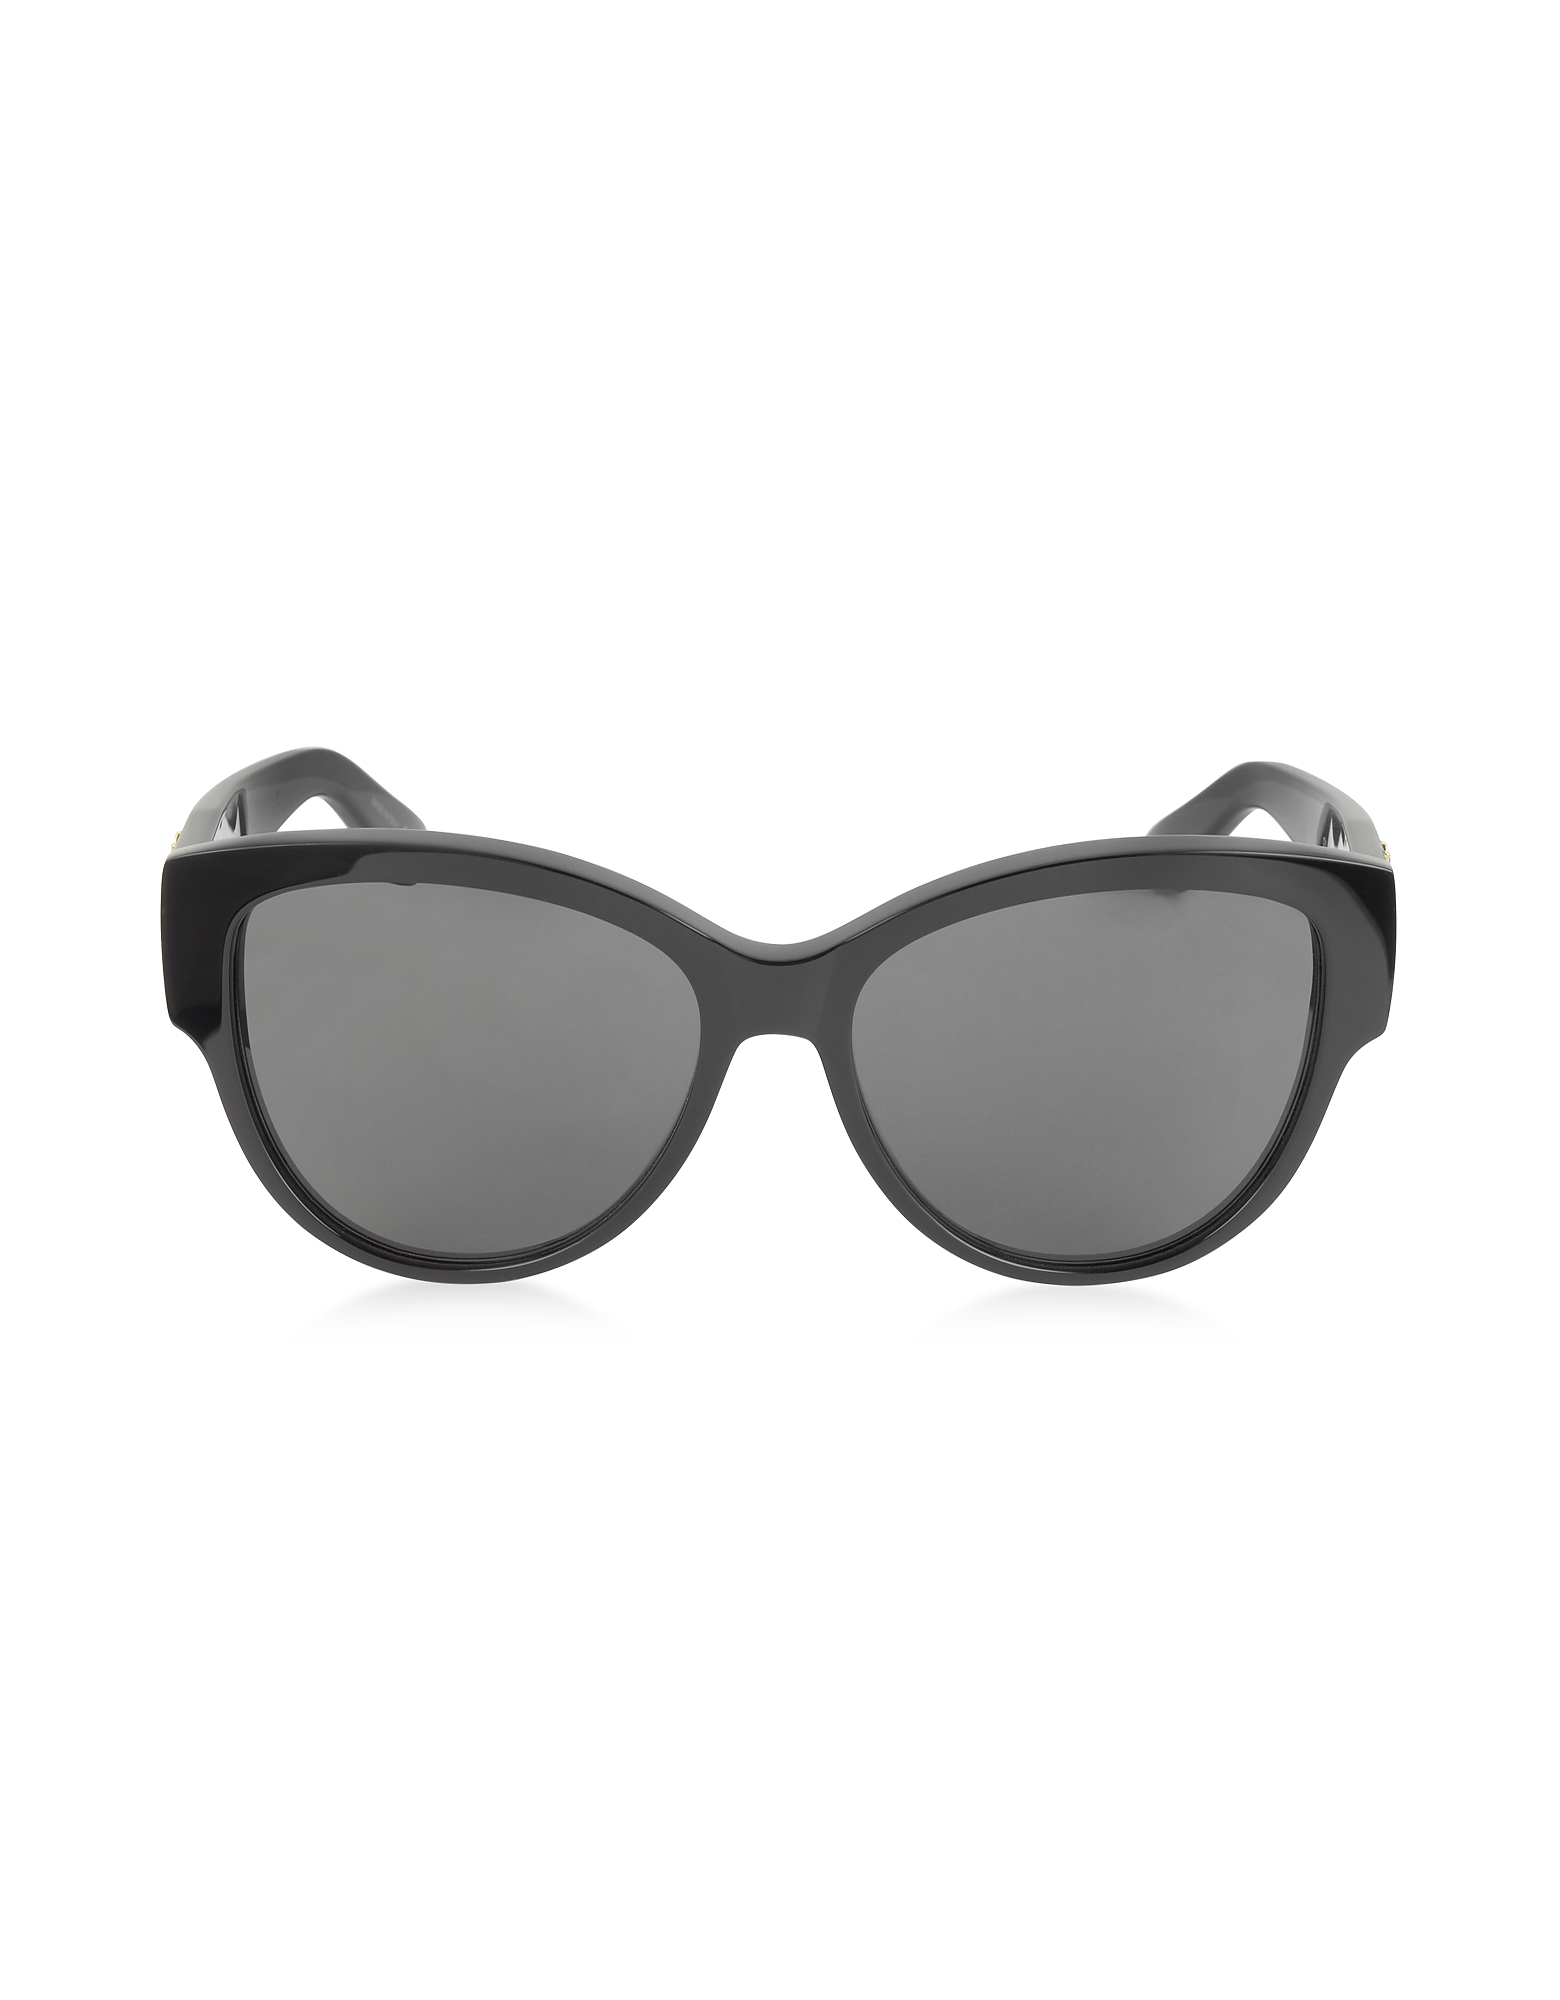 

SL M3 002 Black Acetate Round Frame Women's Sunglasses